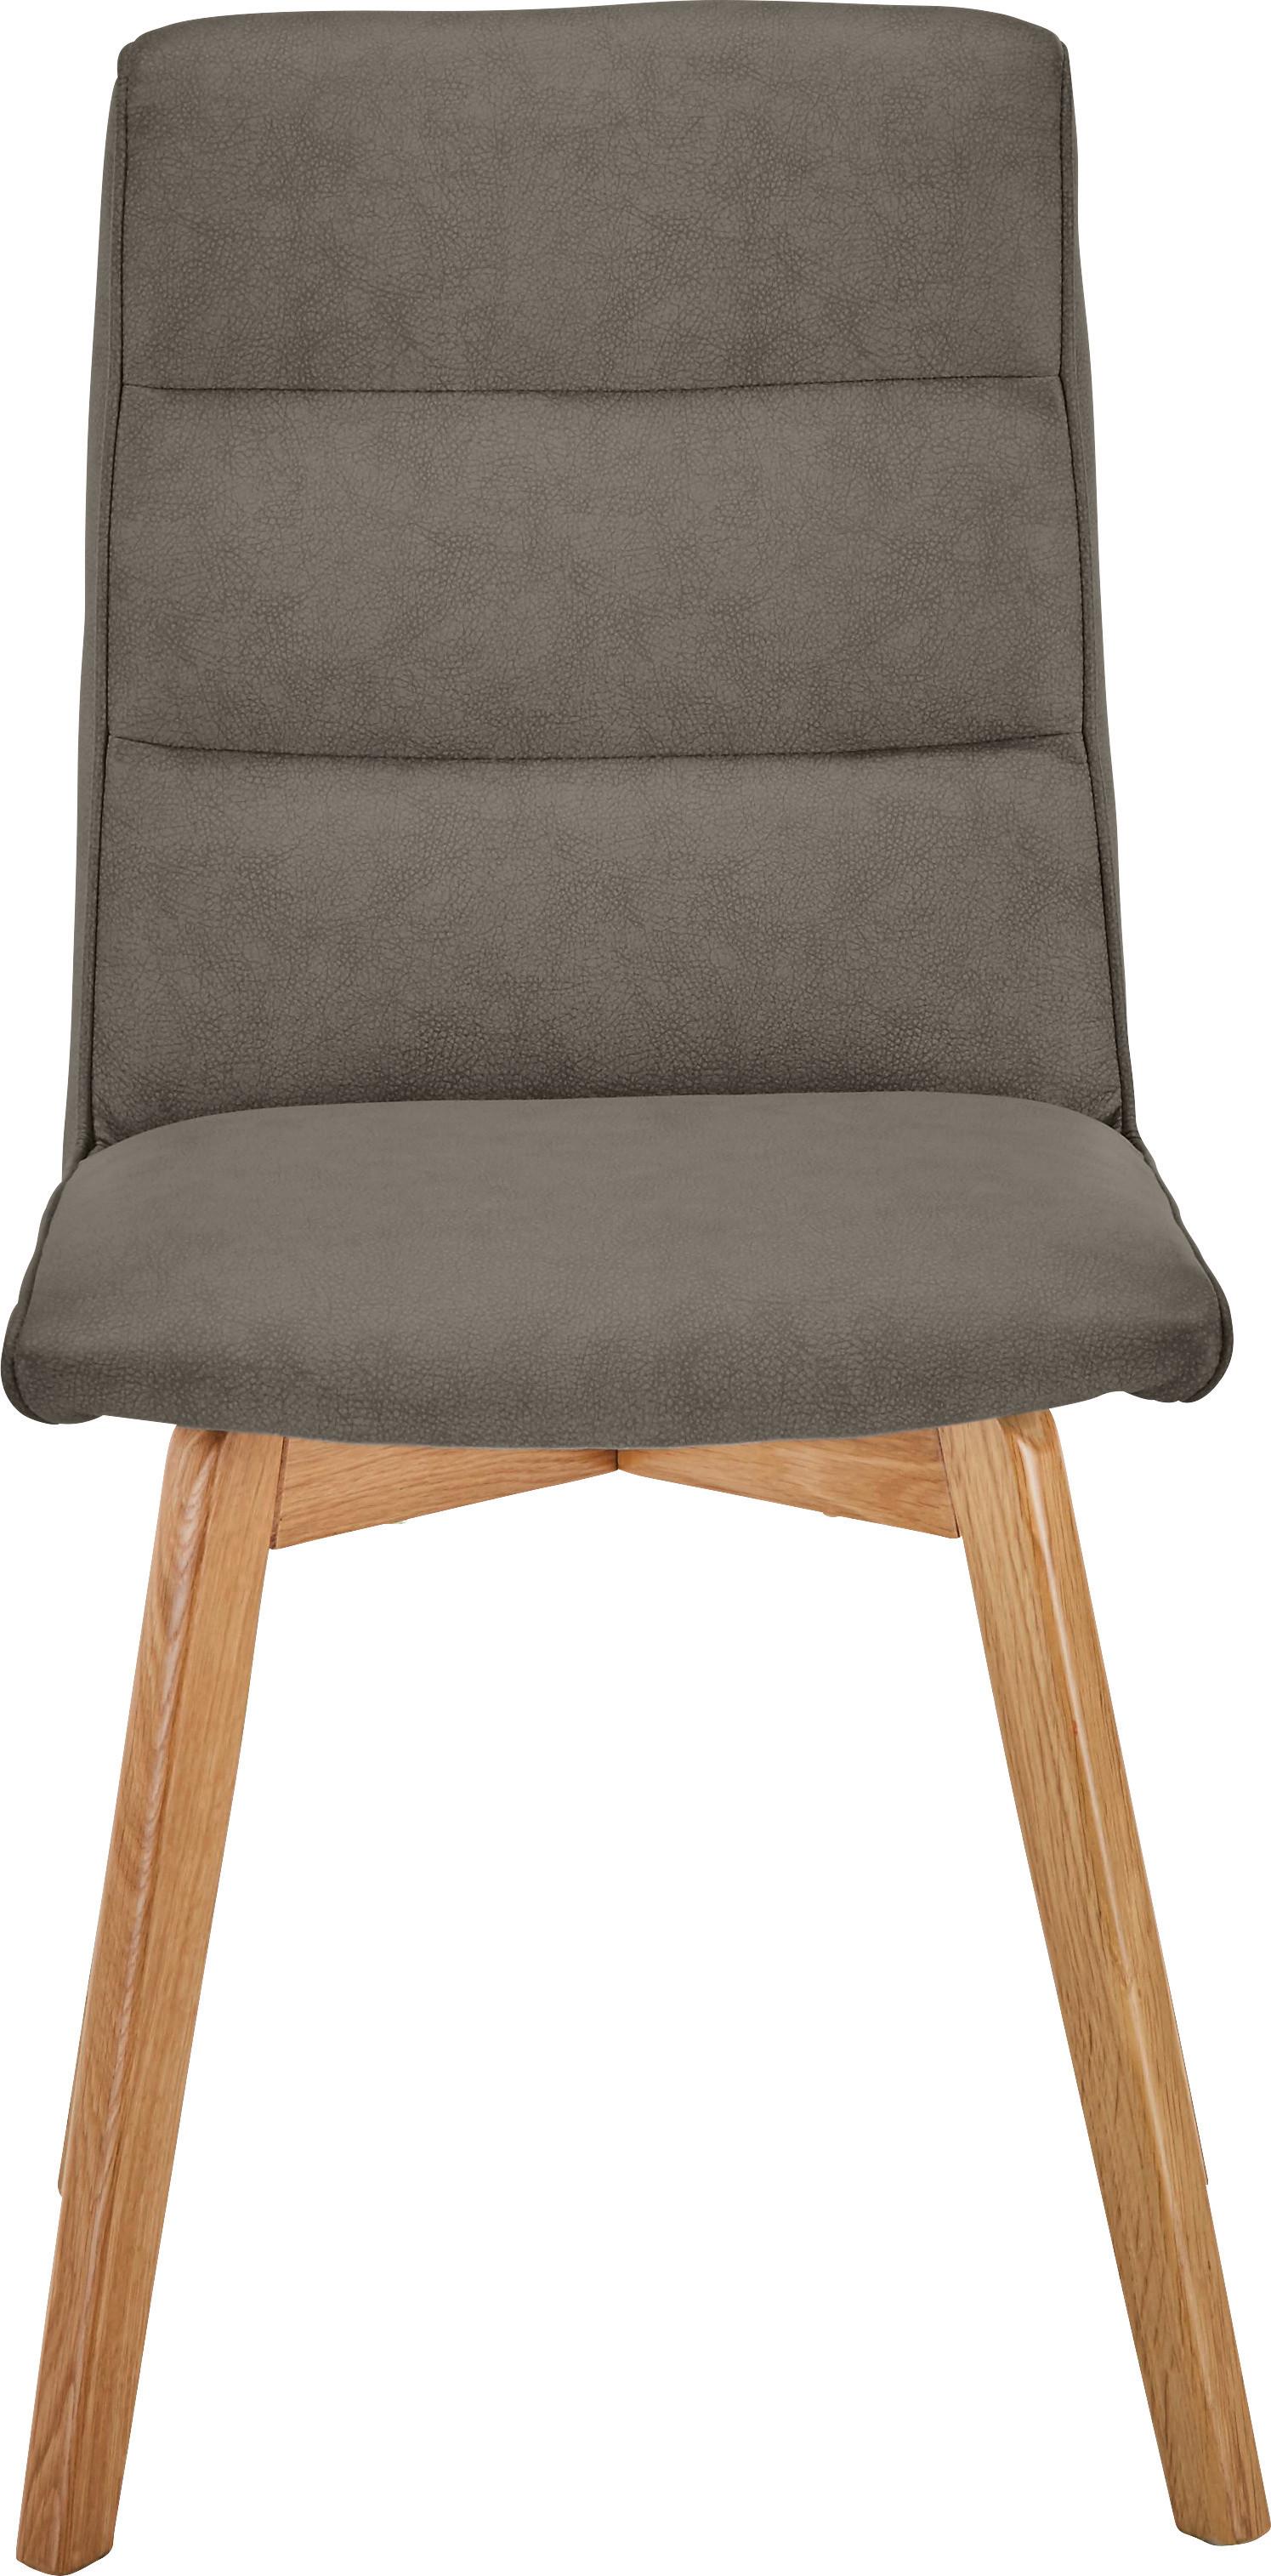 Stolica Ellie - boje hrasta/smeđa, Modern, drvo/tekstil (44/87/55,5cm) - Based